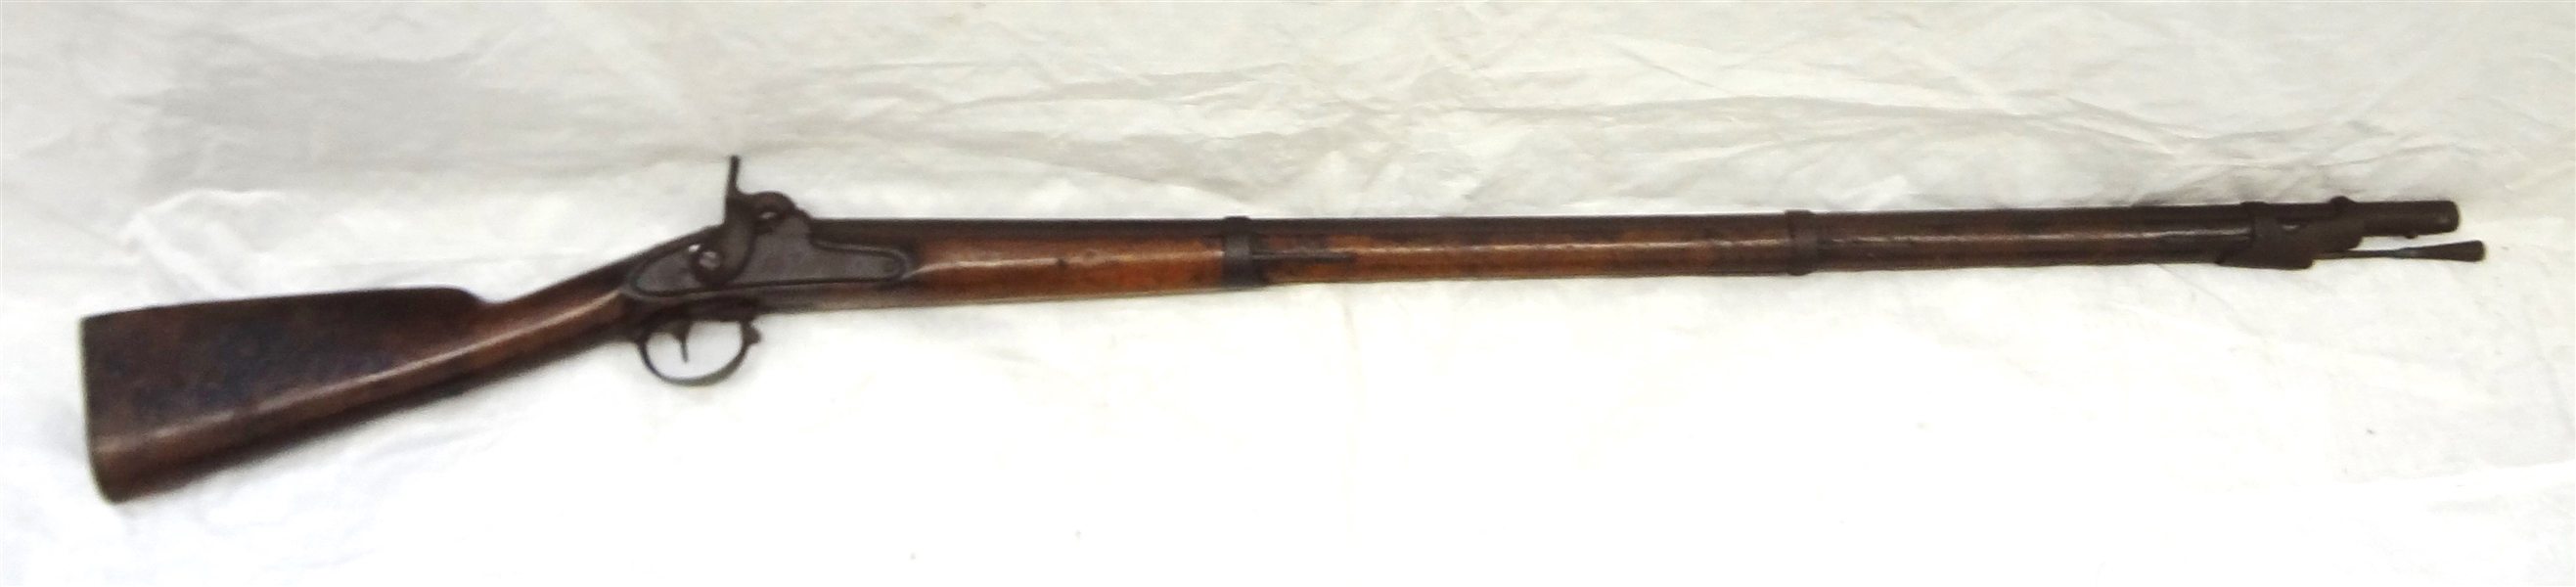 U.S. Springfield Model 1855 Musket